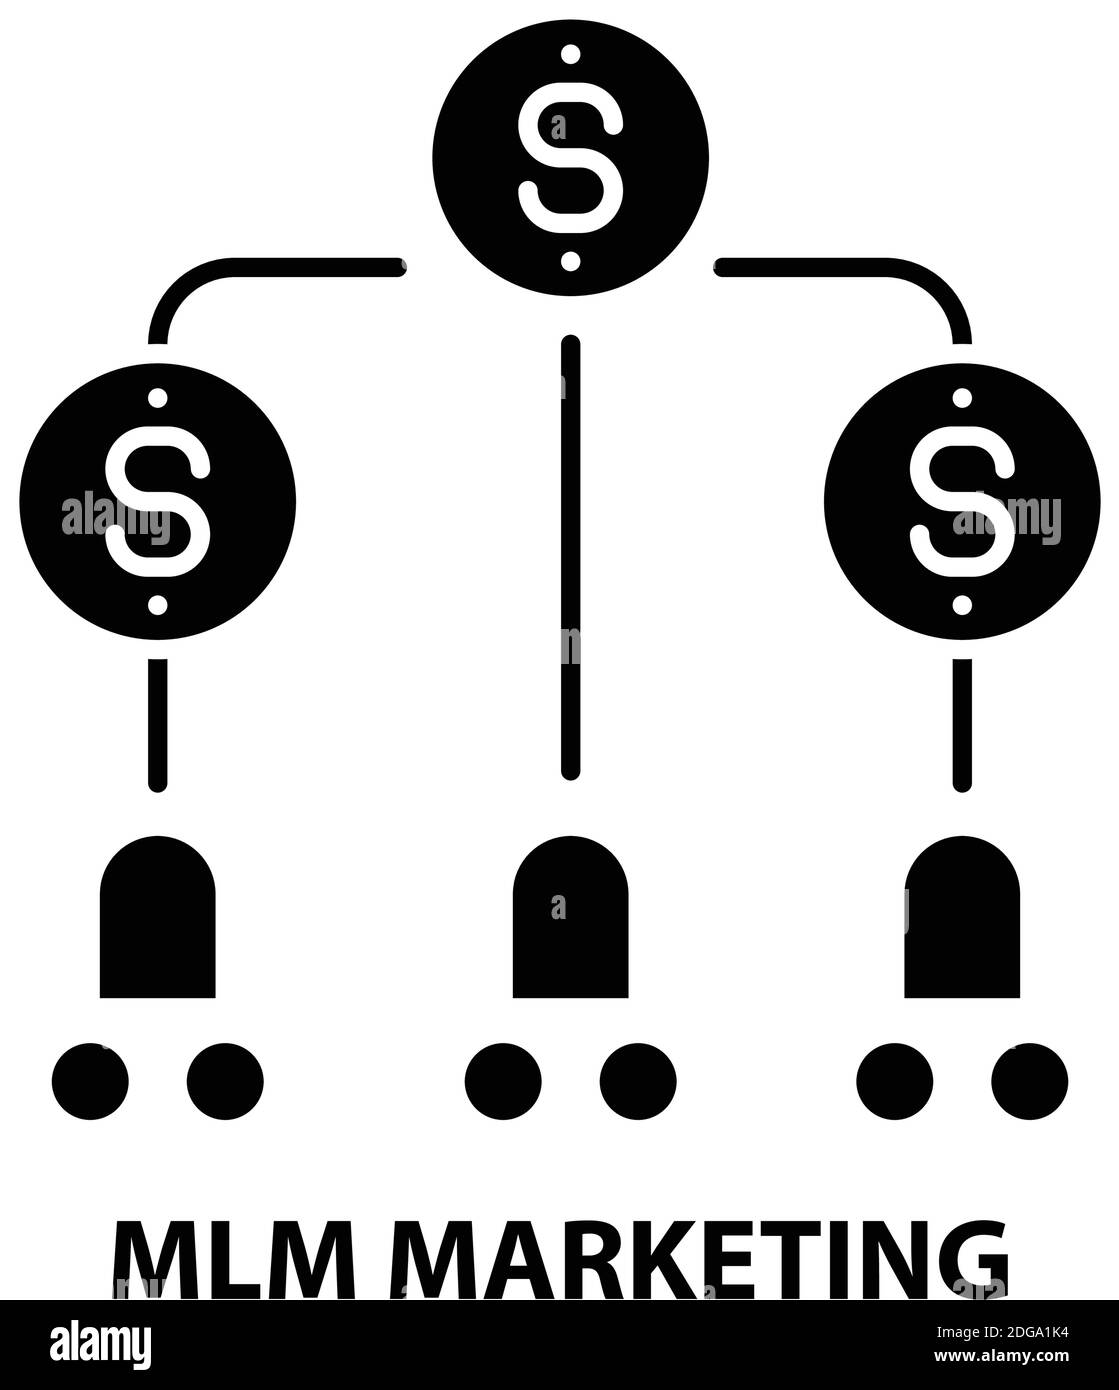 Mlm Marketing Symbol Icon Black Vector Sign With Editable Strokes Concept Illustration Stock 